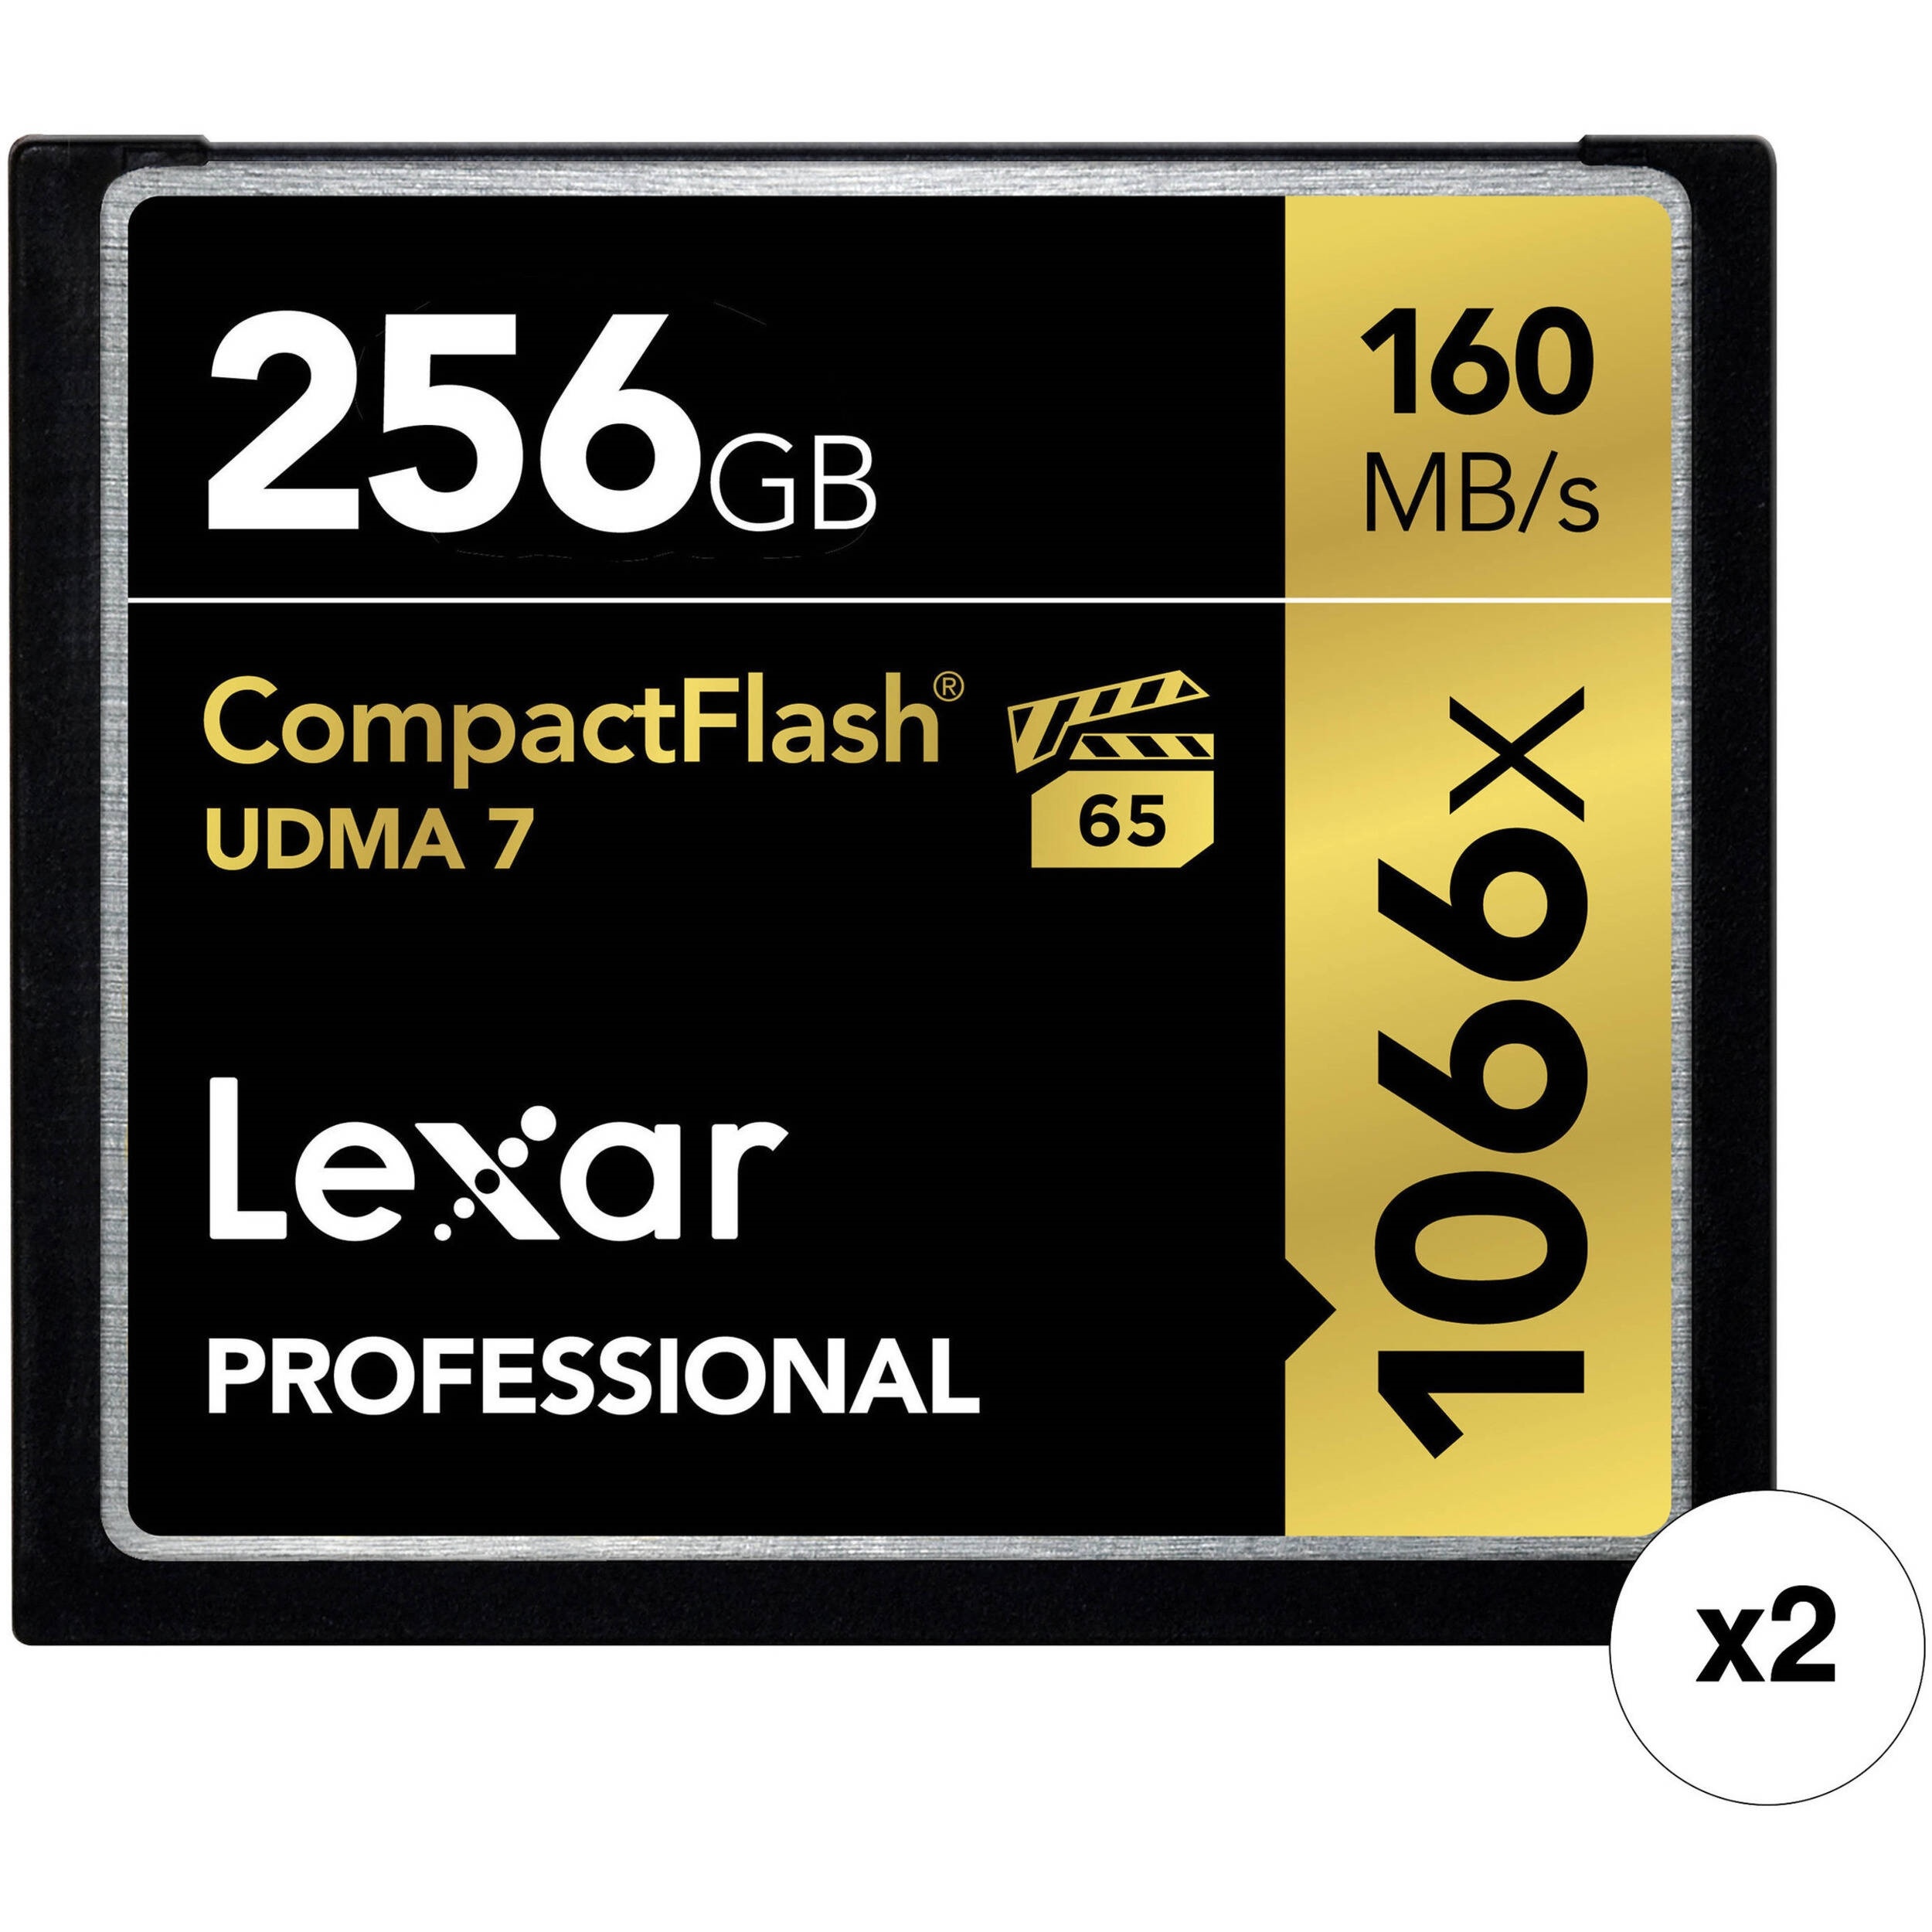 Lexar 256GB Professional 1066x CompactFlash Memory Card Kit (UDMA 7, 2-Pack)